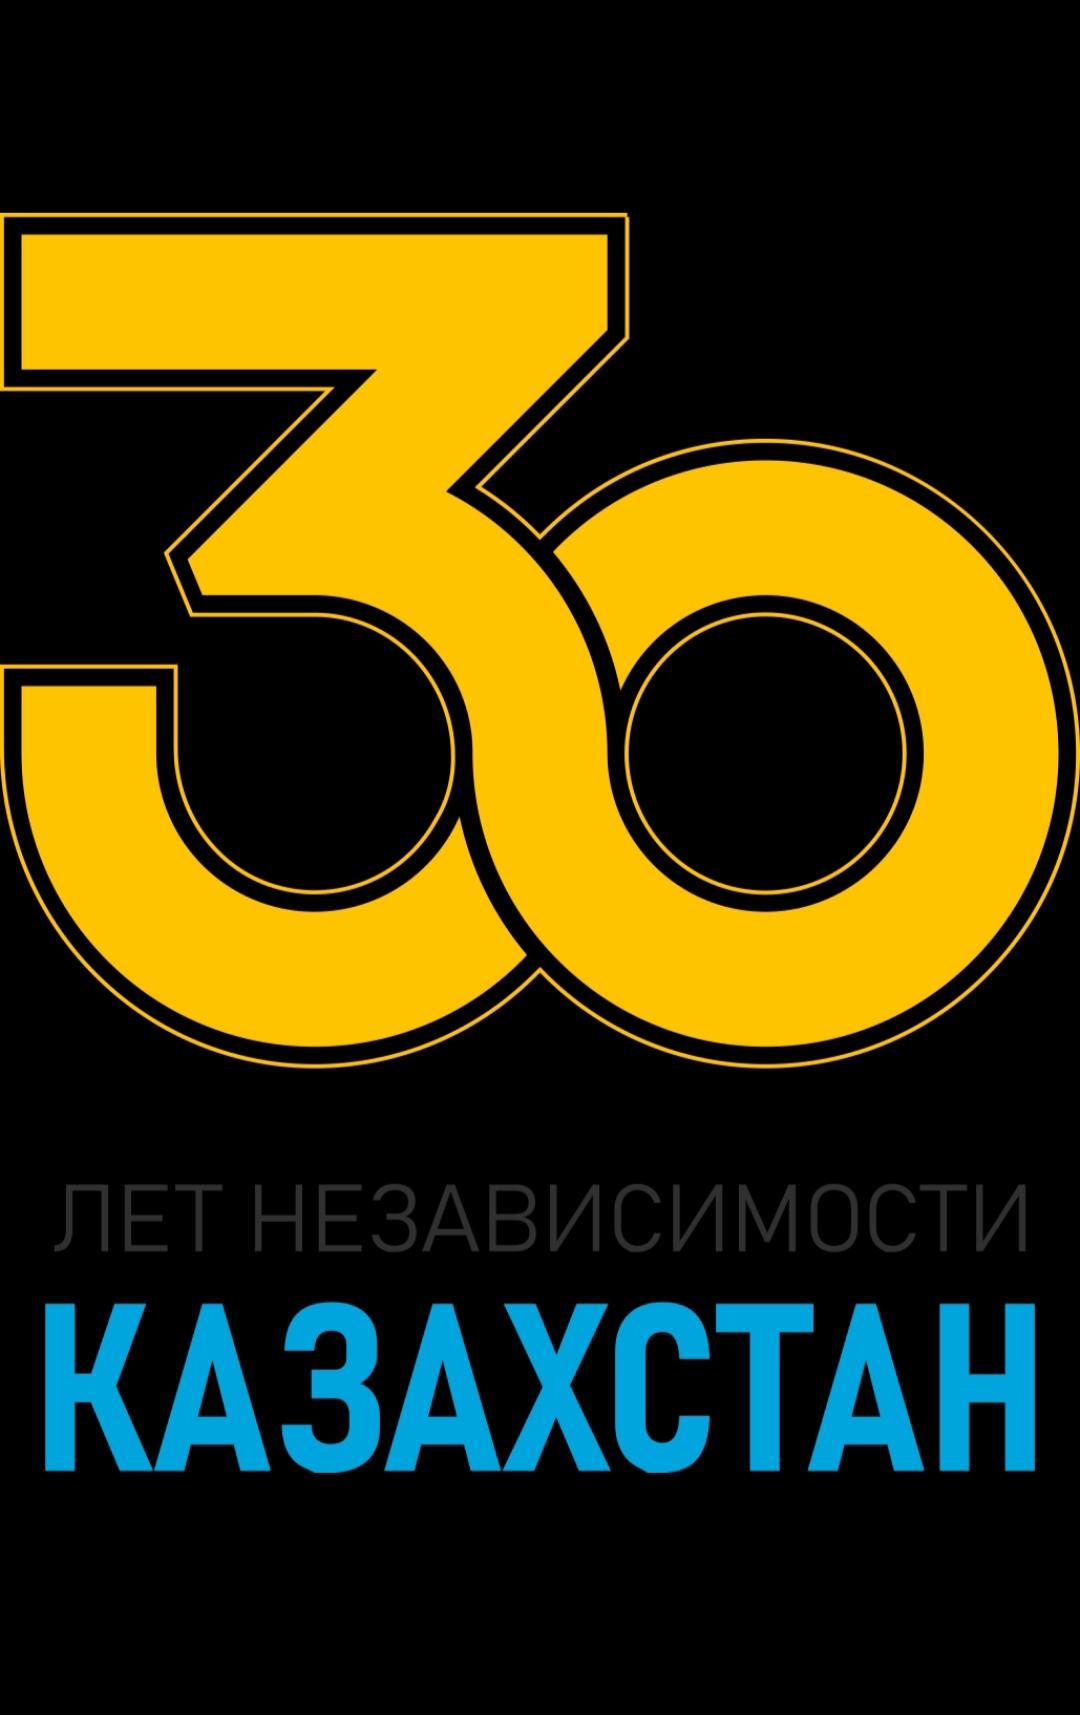 30 лет Независимости Казахстана